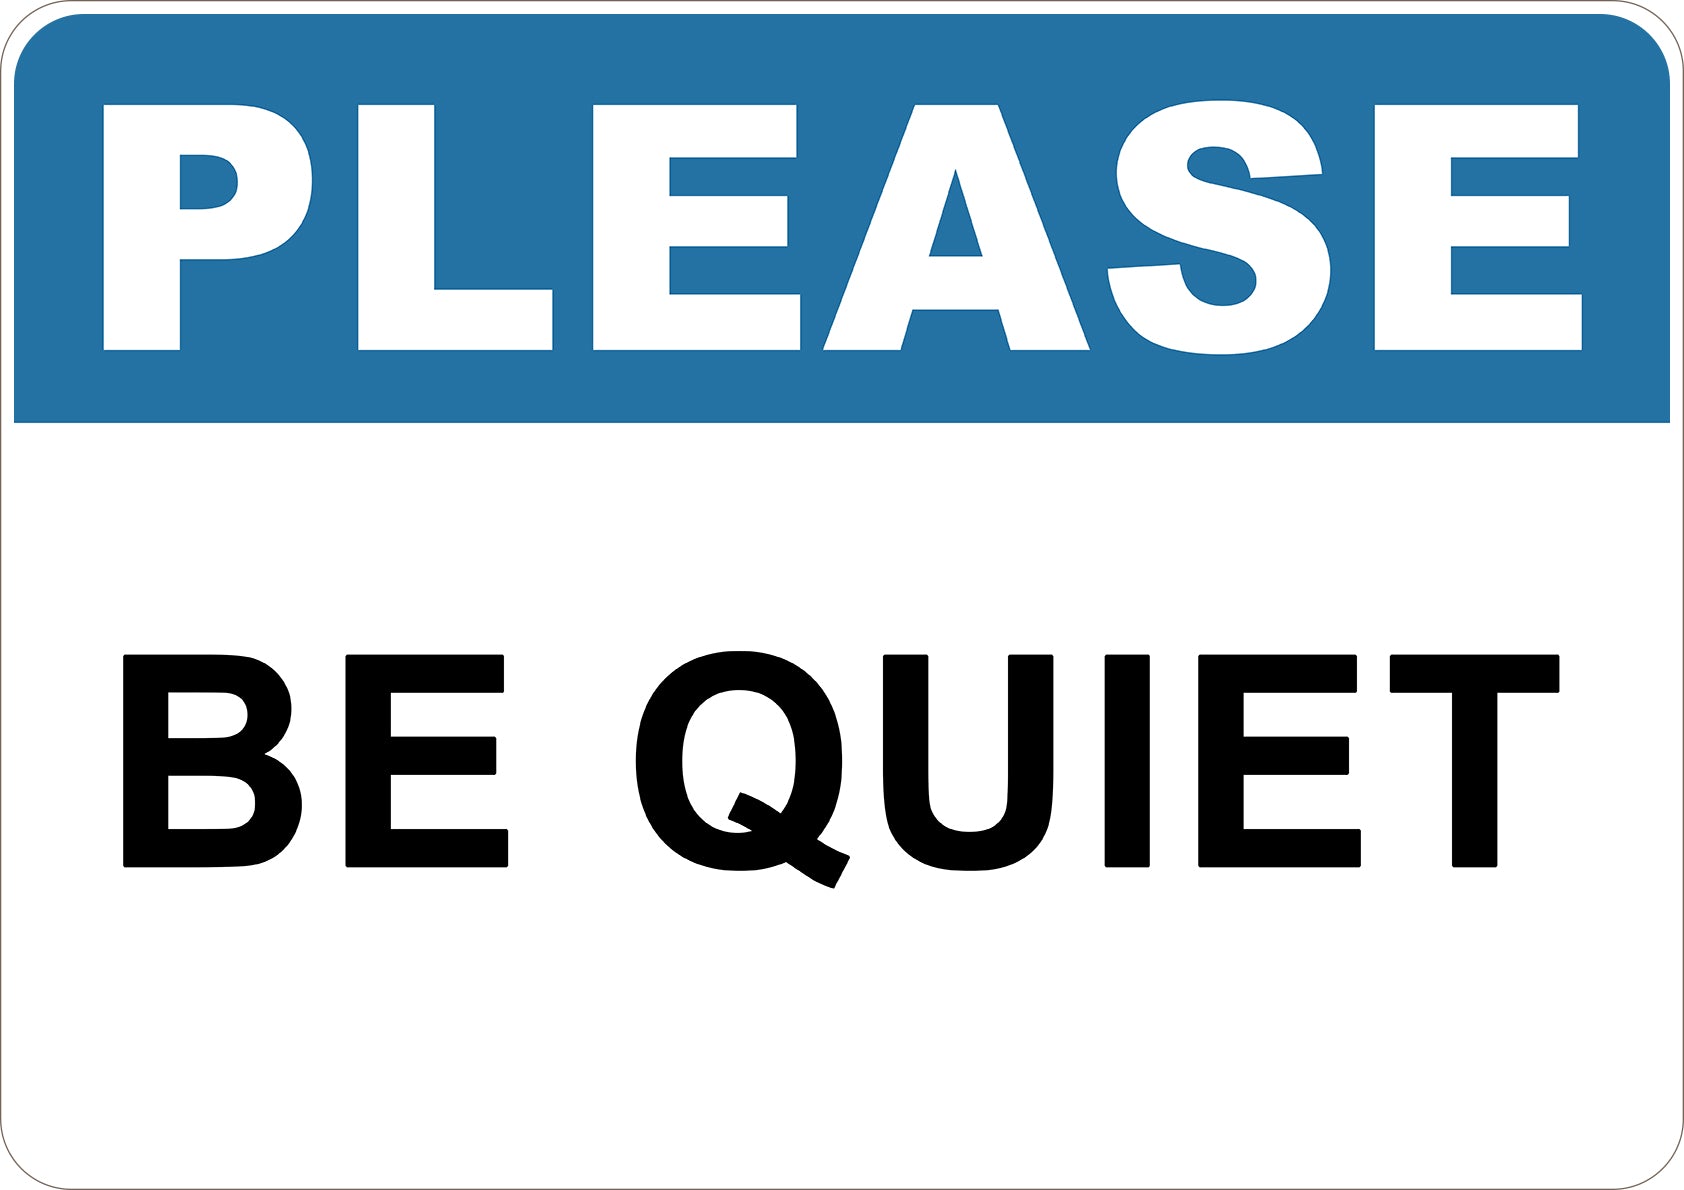 Please Be Quiet Sign - Create Signs Australia